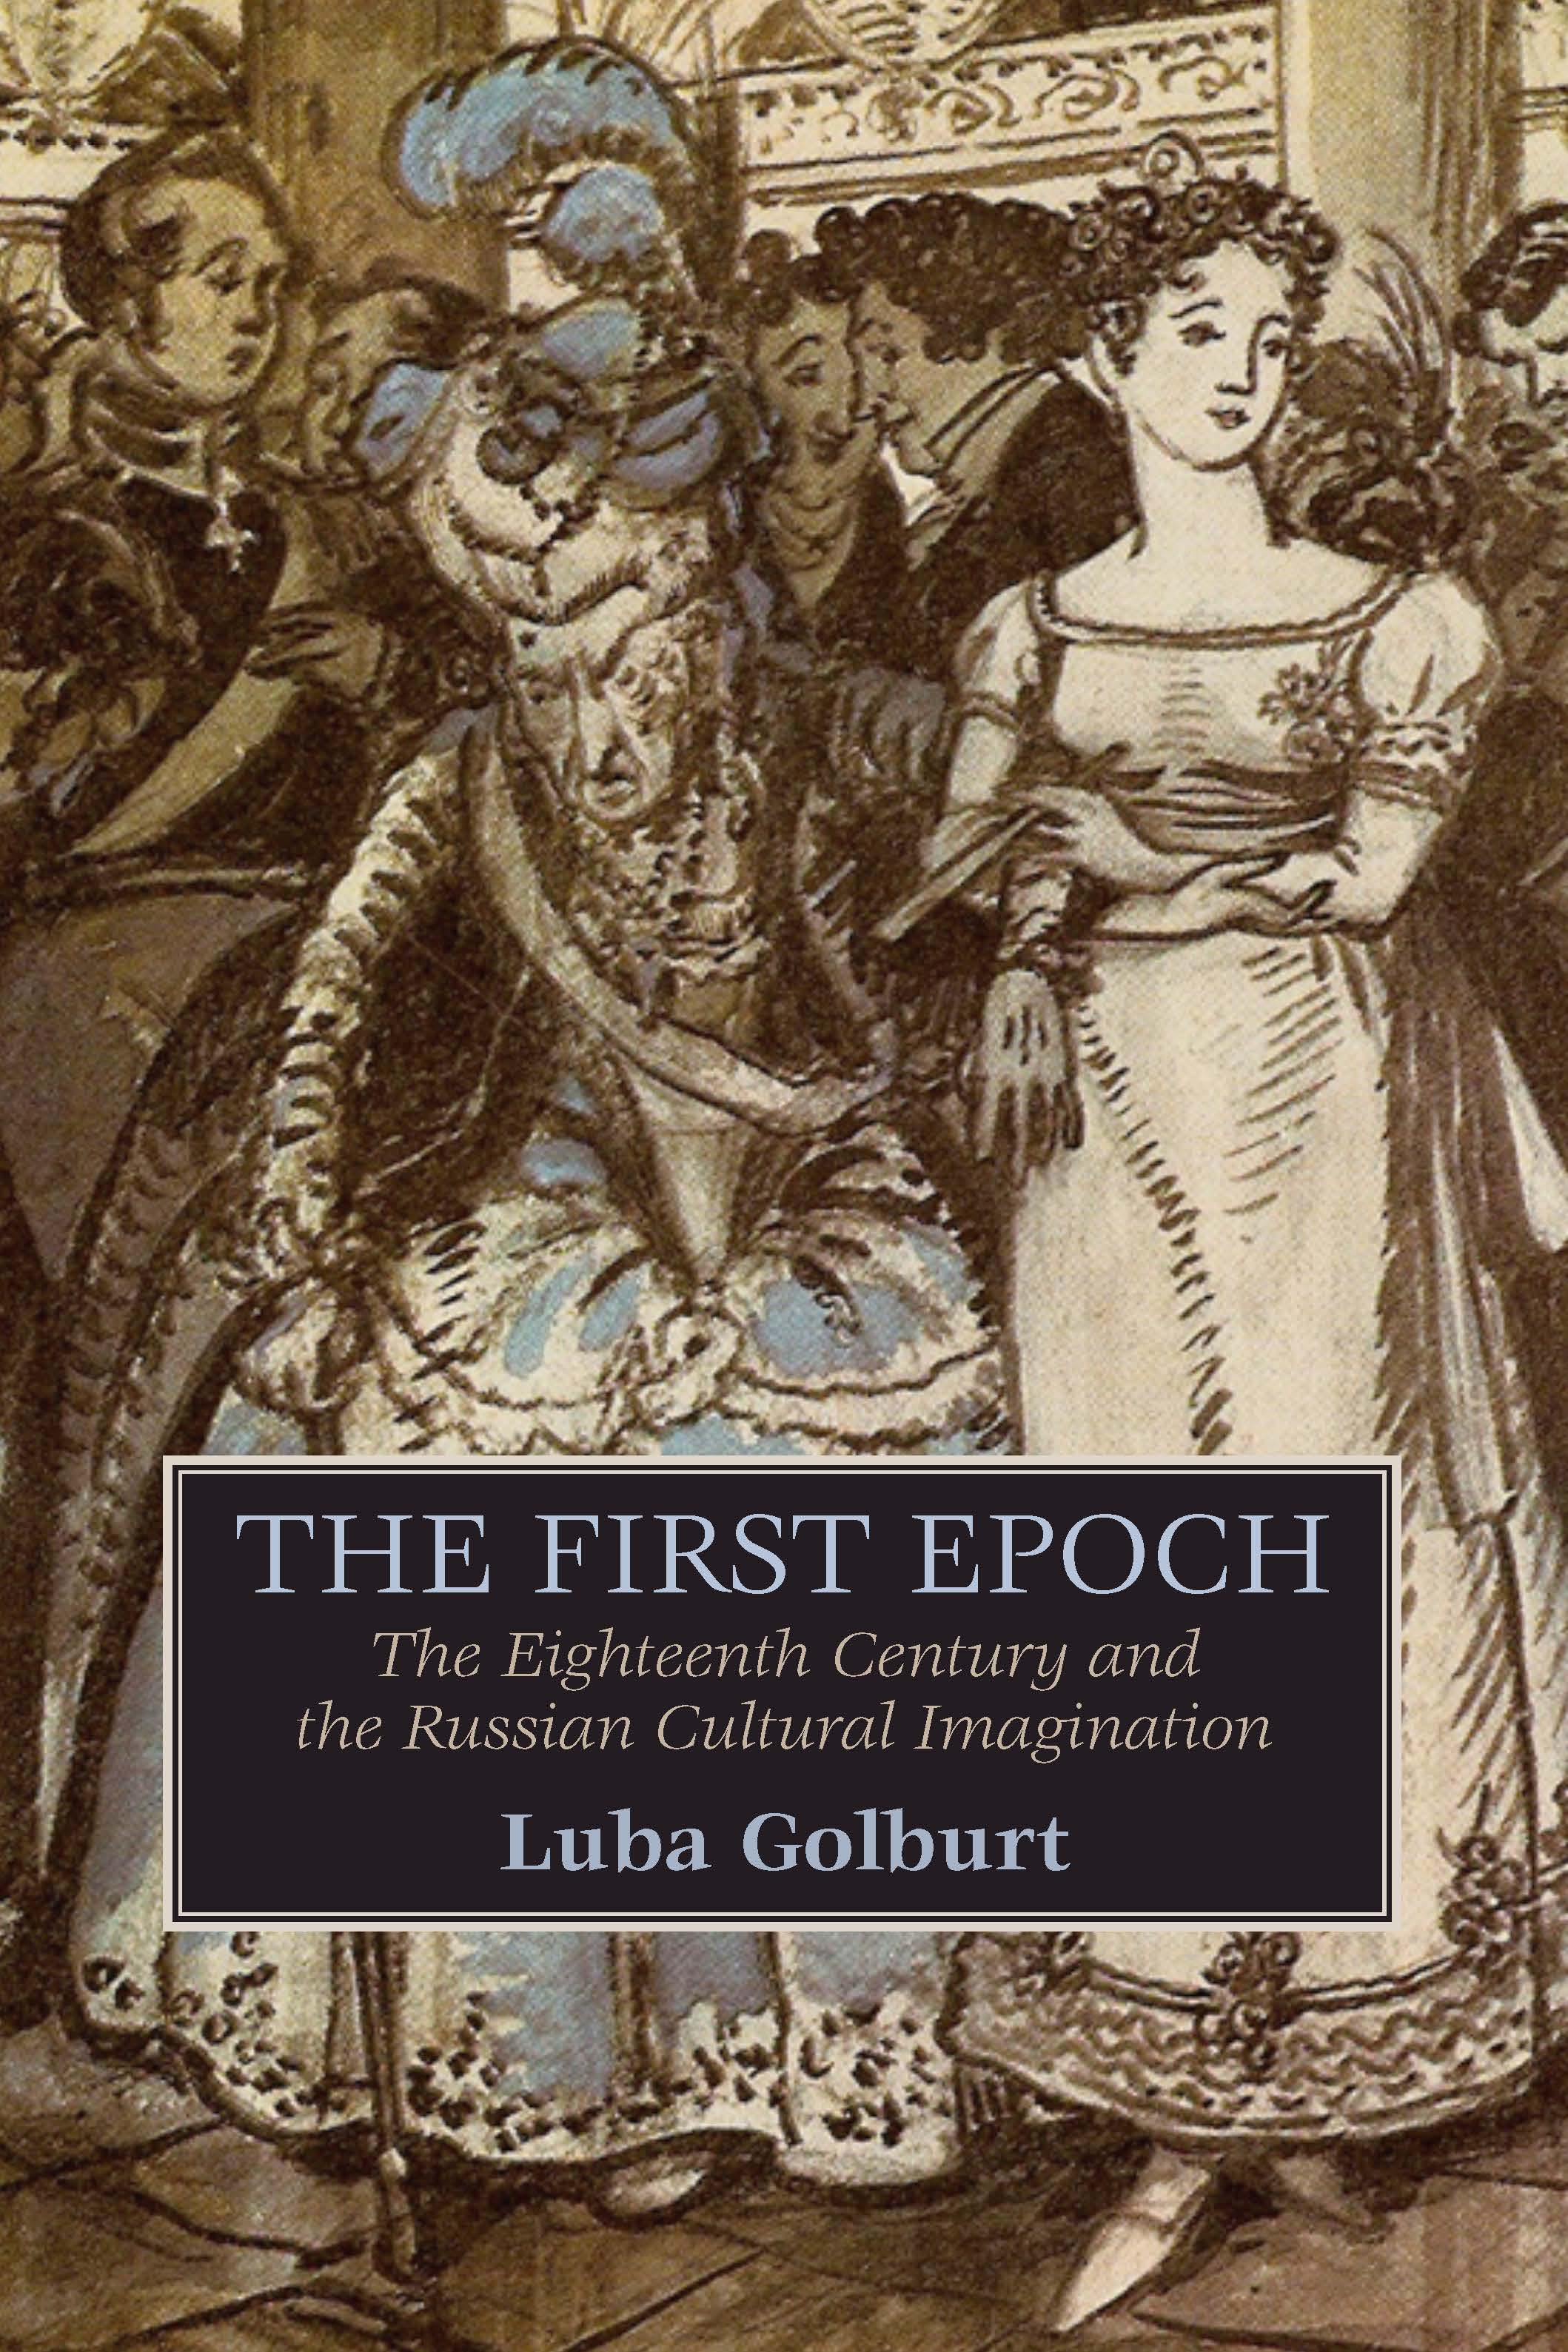 Image of Golburt's book cover